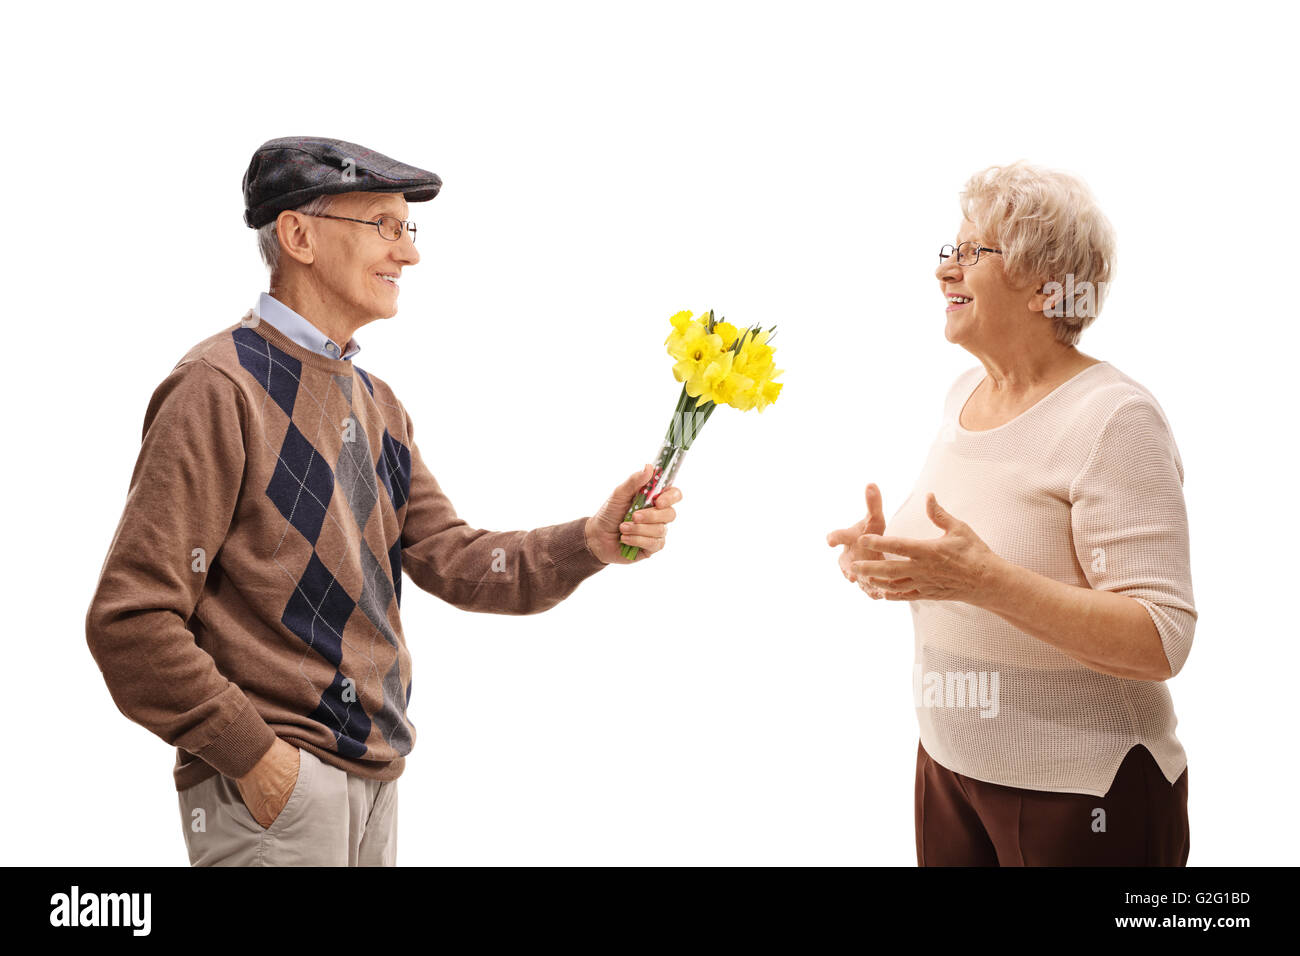 Hombre regalando flores fotografías e imágenes de alta resolución - Alamy